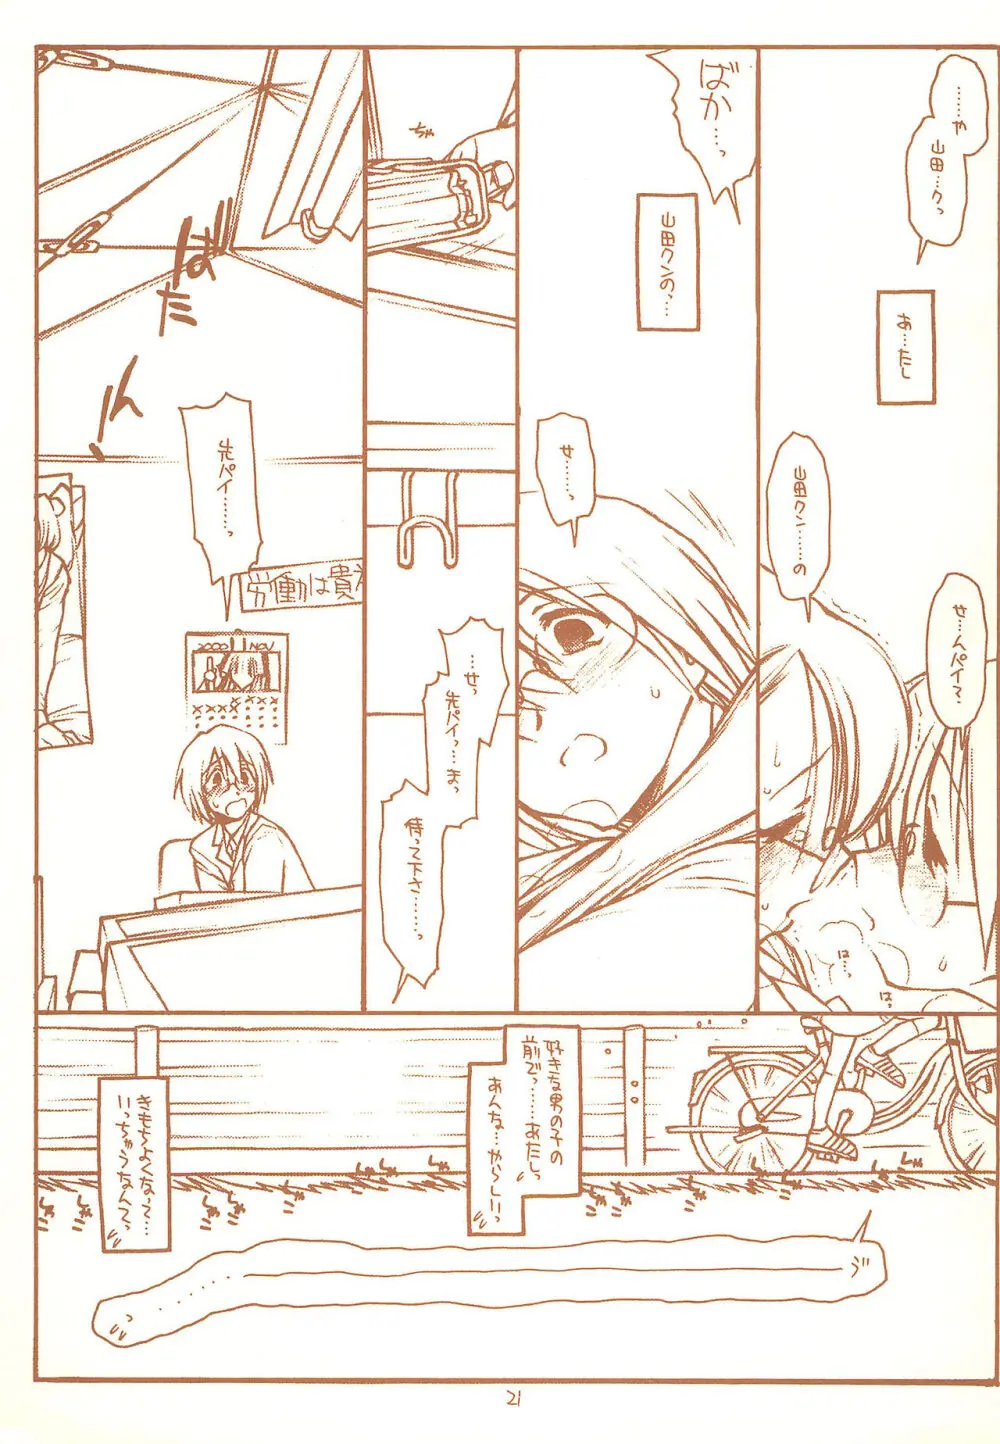 SATOHSAN+YAMADAKUN1 RANGE 1.01 A STEREORANGE PRODUCT 21ページ